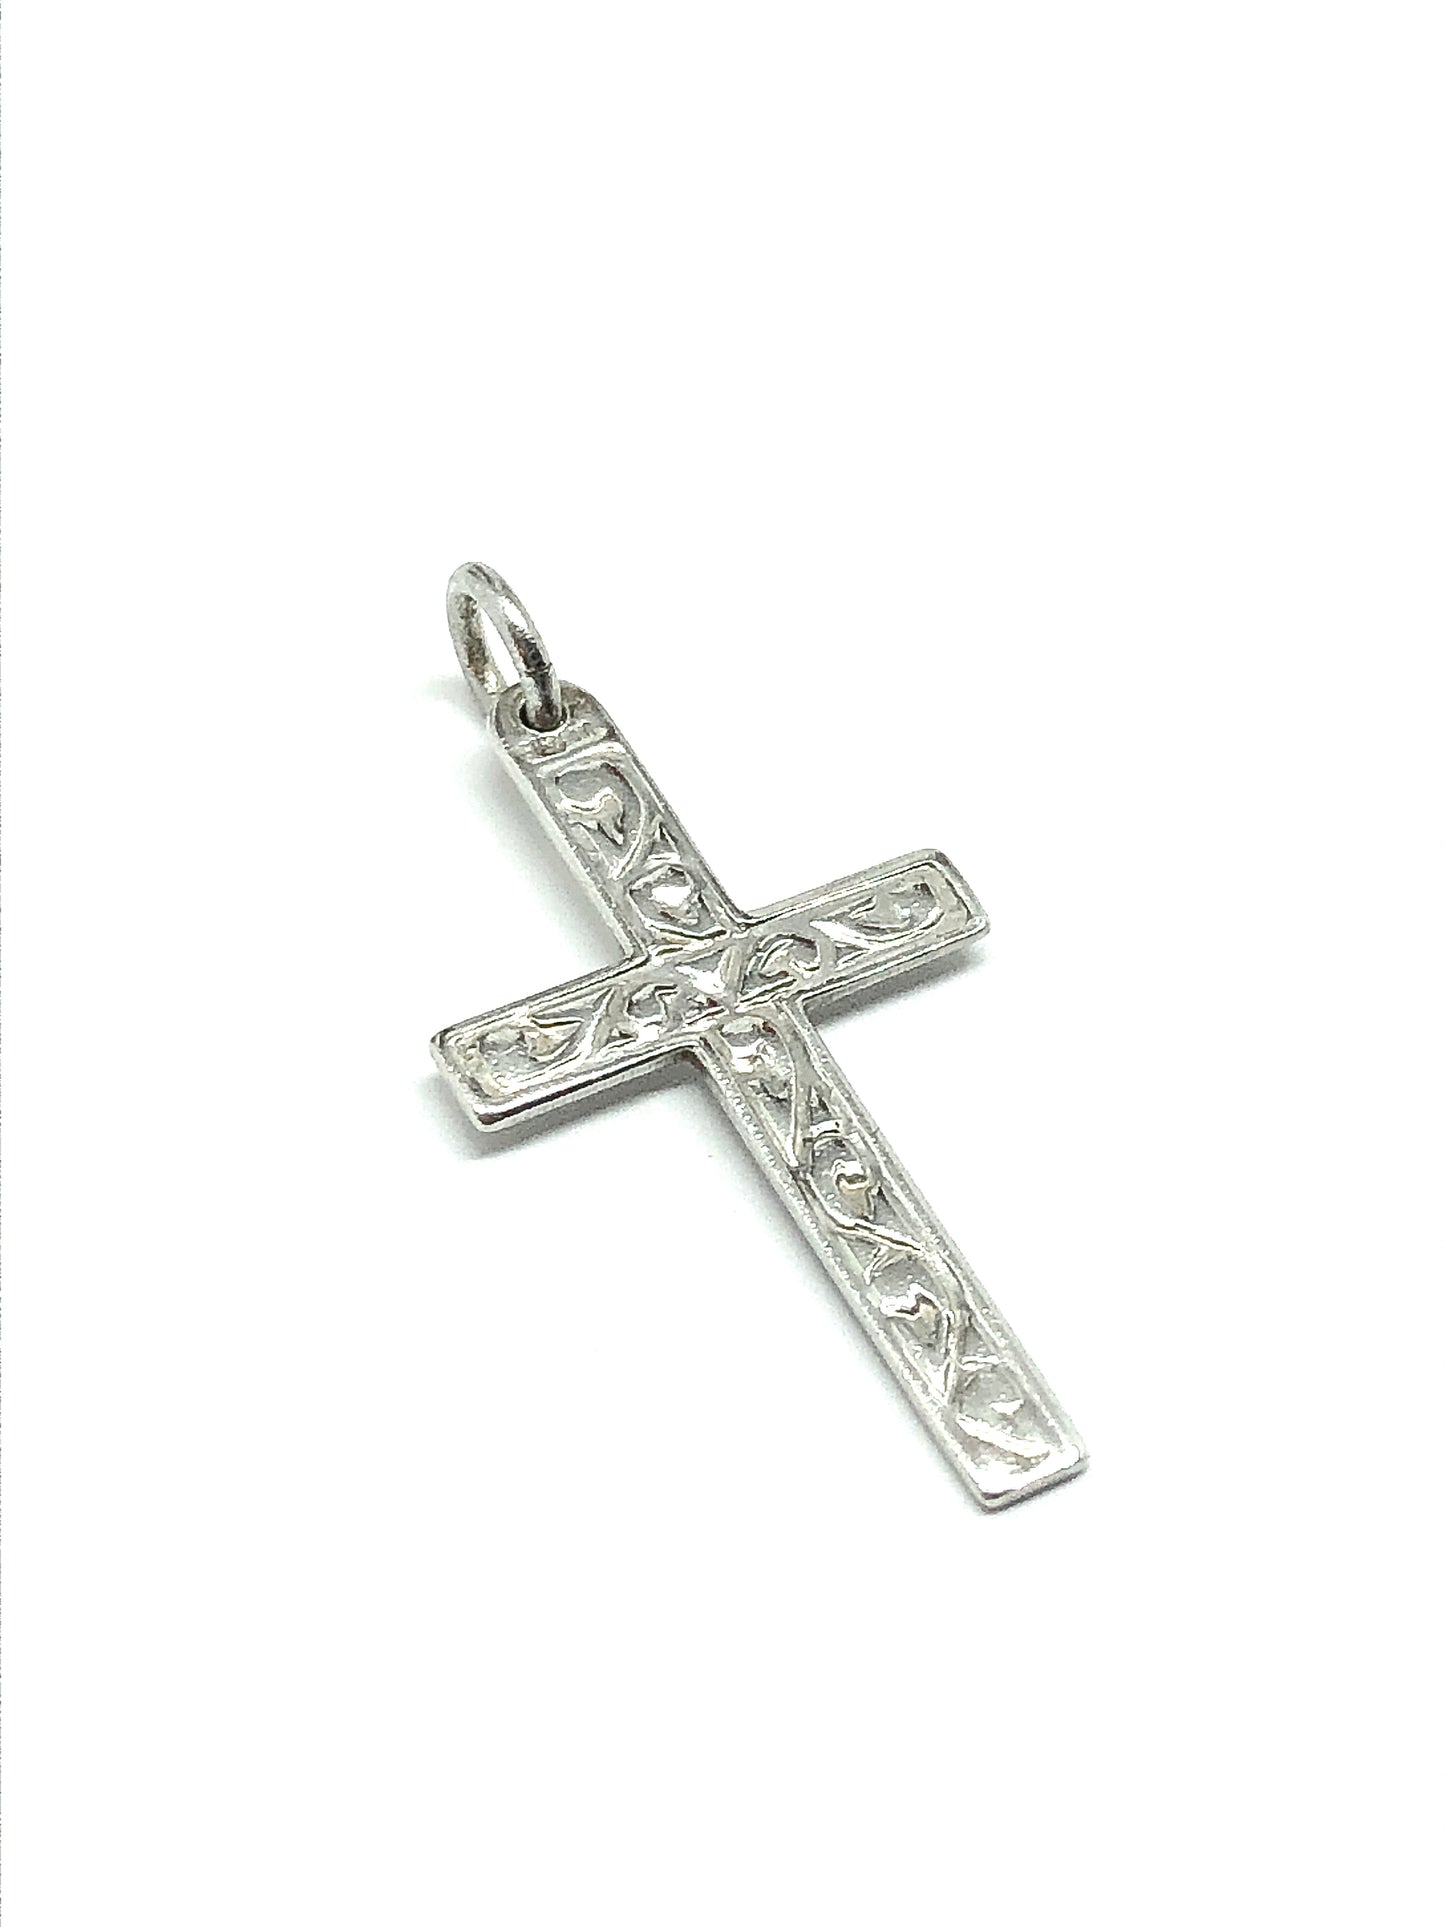 Vintage 1950s Sterling Silver Cross Pendant